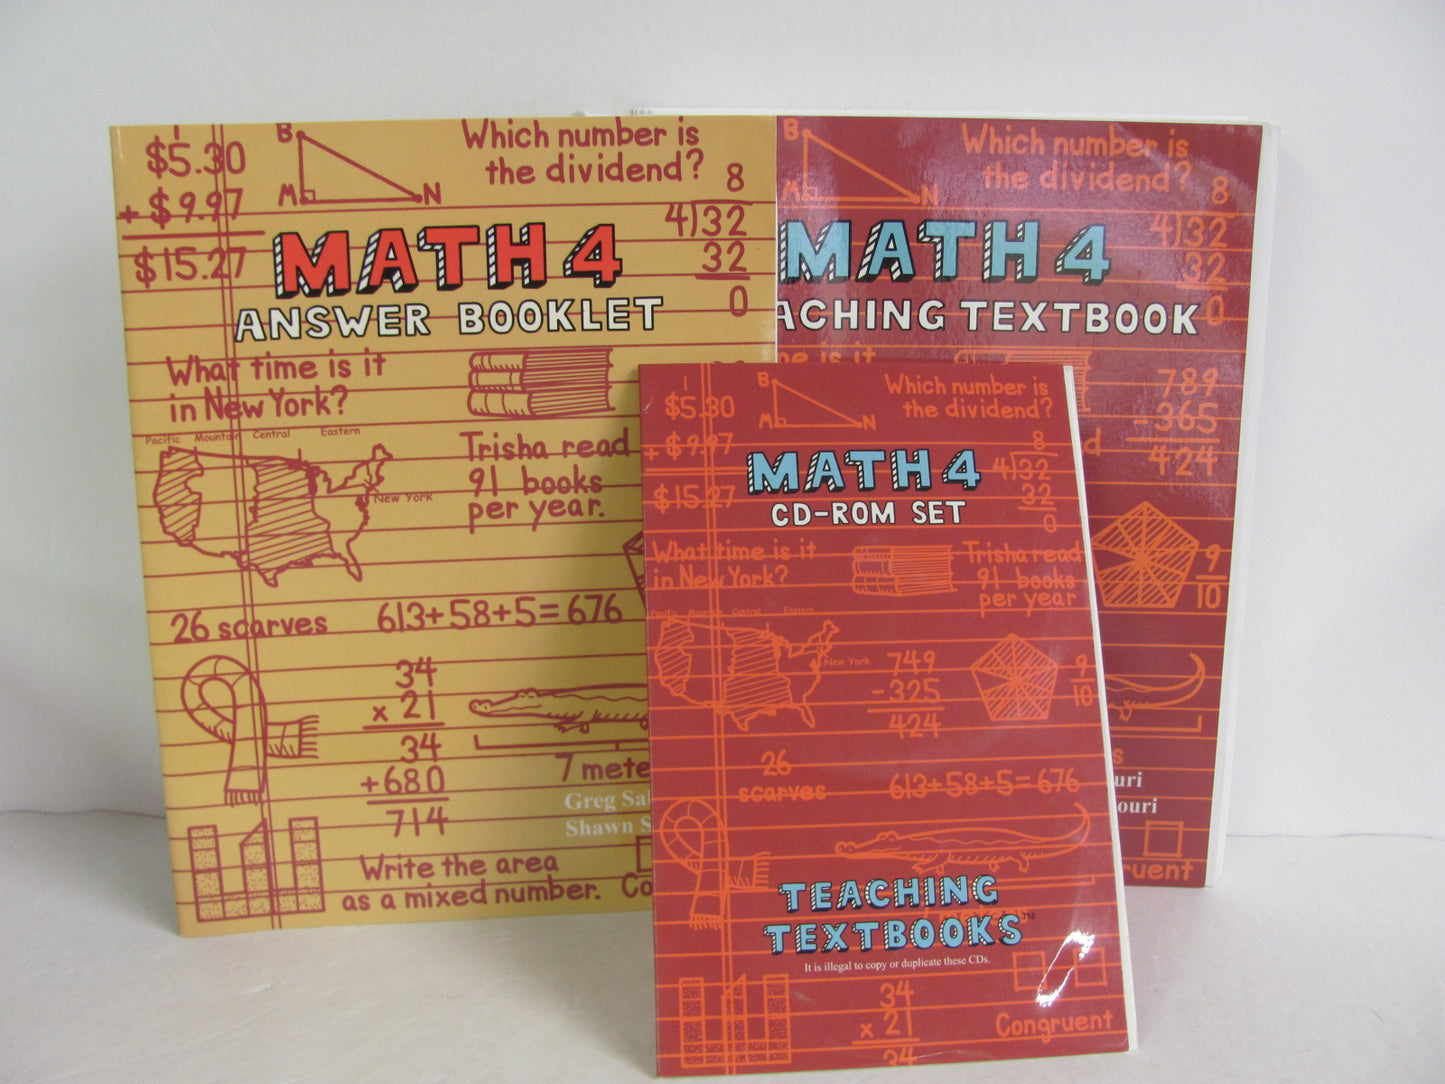 Math 4 Teaching Textbook Set  Pre-Owned 4th Grade Mathematics Textbooks